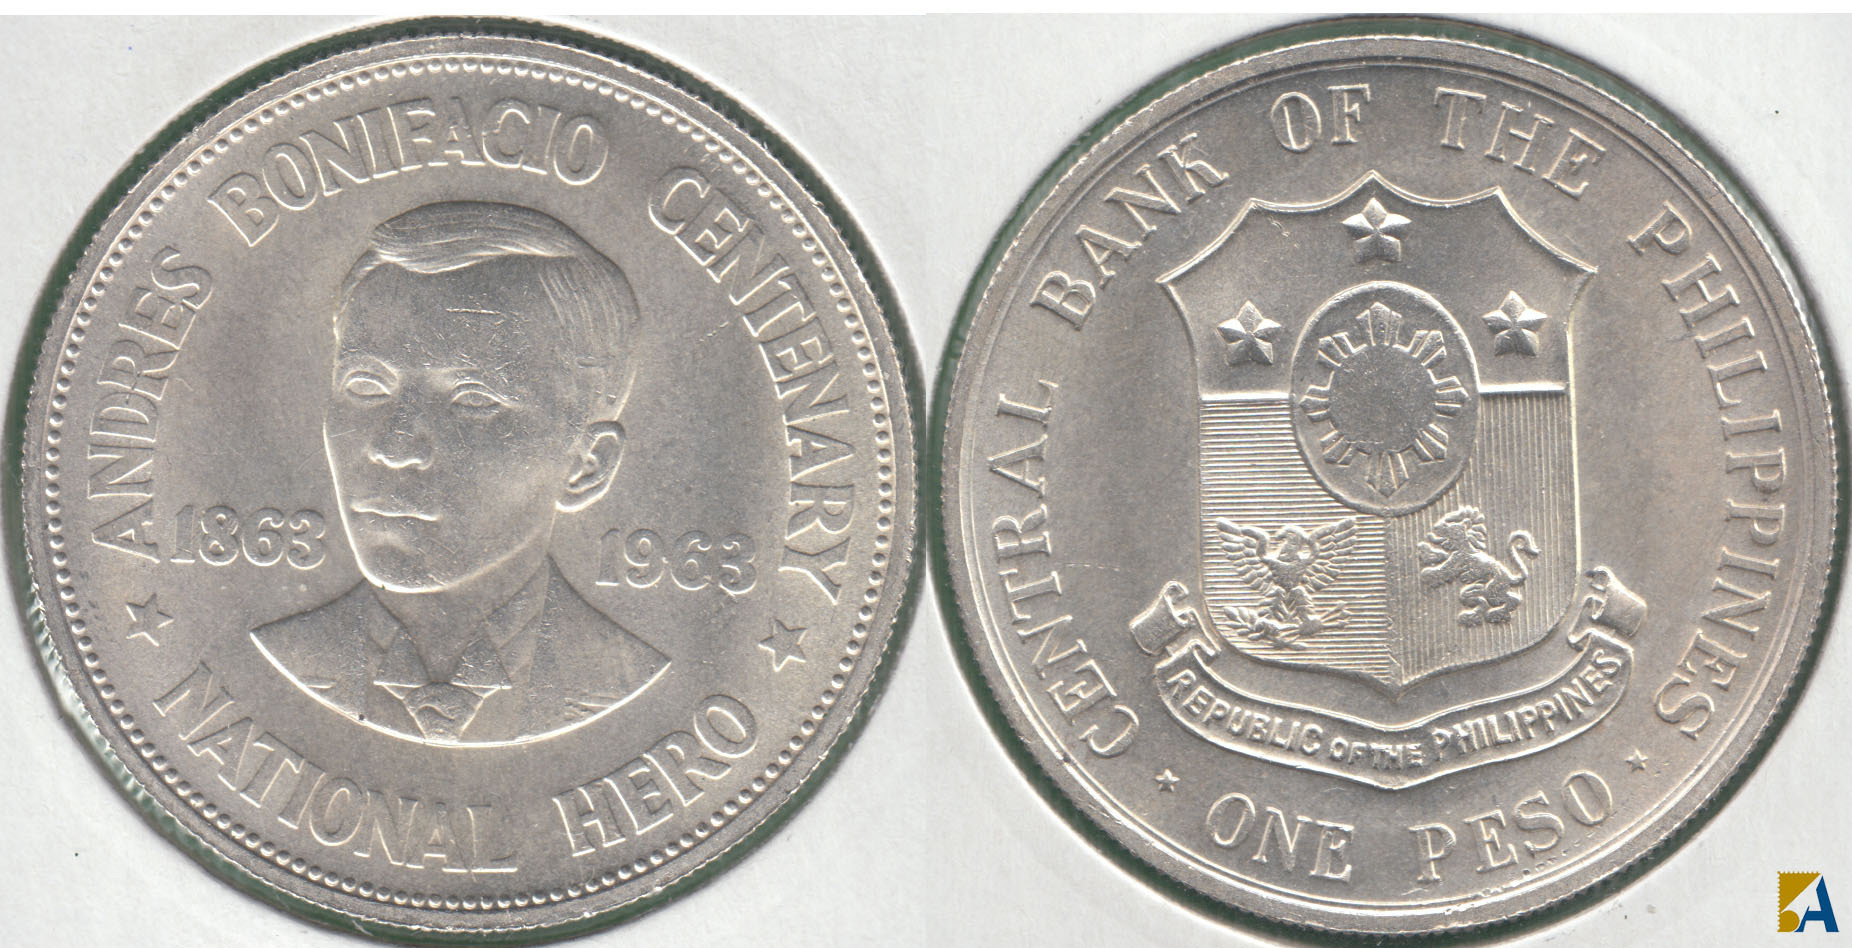 FILIPINAS. 1 PESO DE 1963. PLATA 0.900. (2)